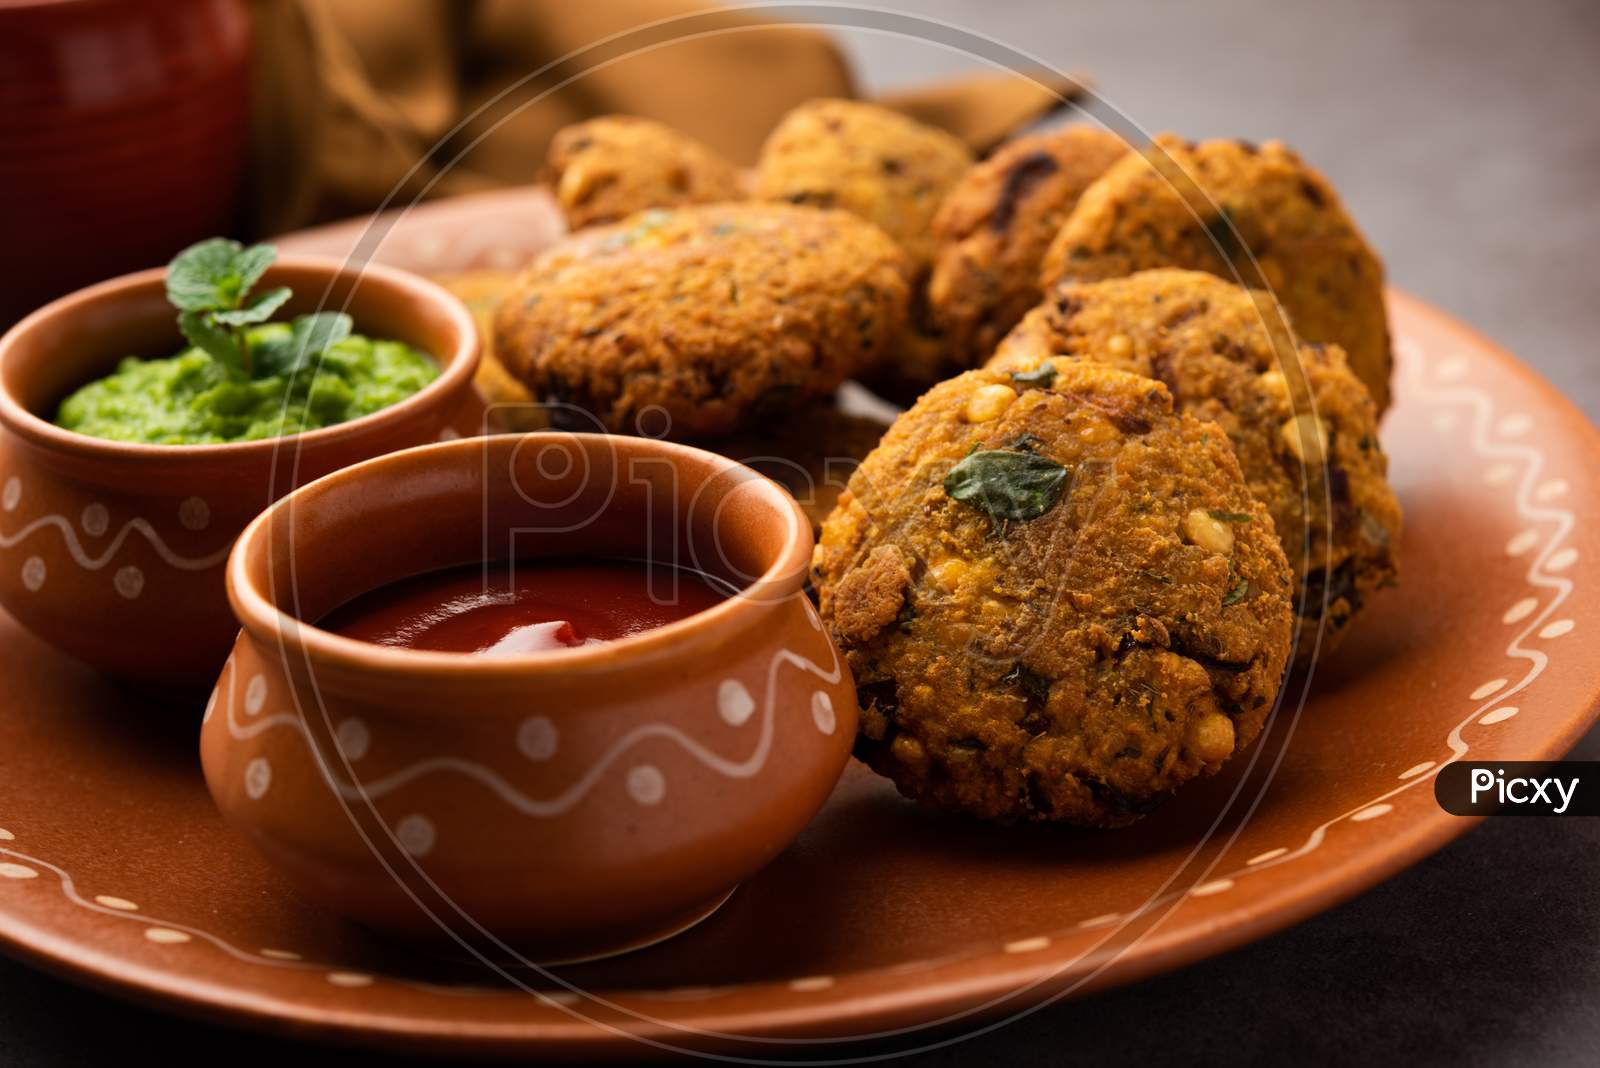 Parippu Or Paruppu Vadai Or Masala Chana Dal Vada Served In A Plate With Ketchup